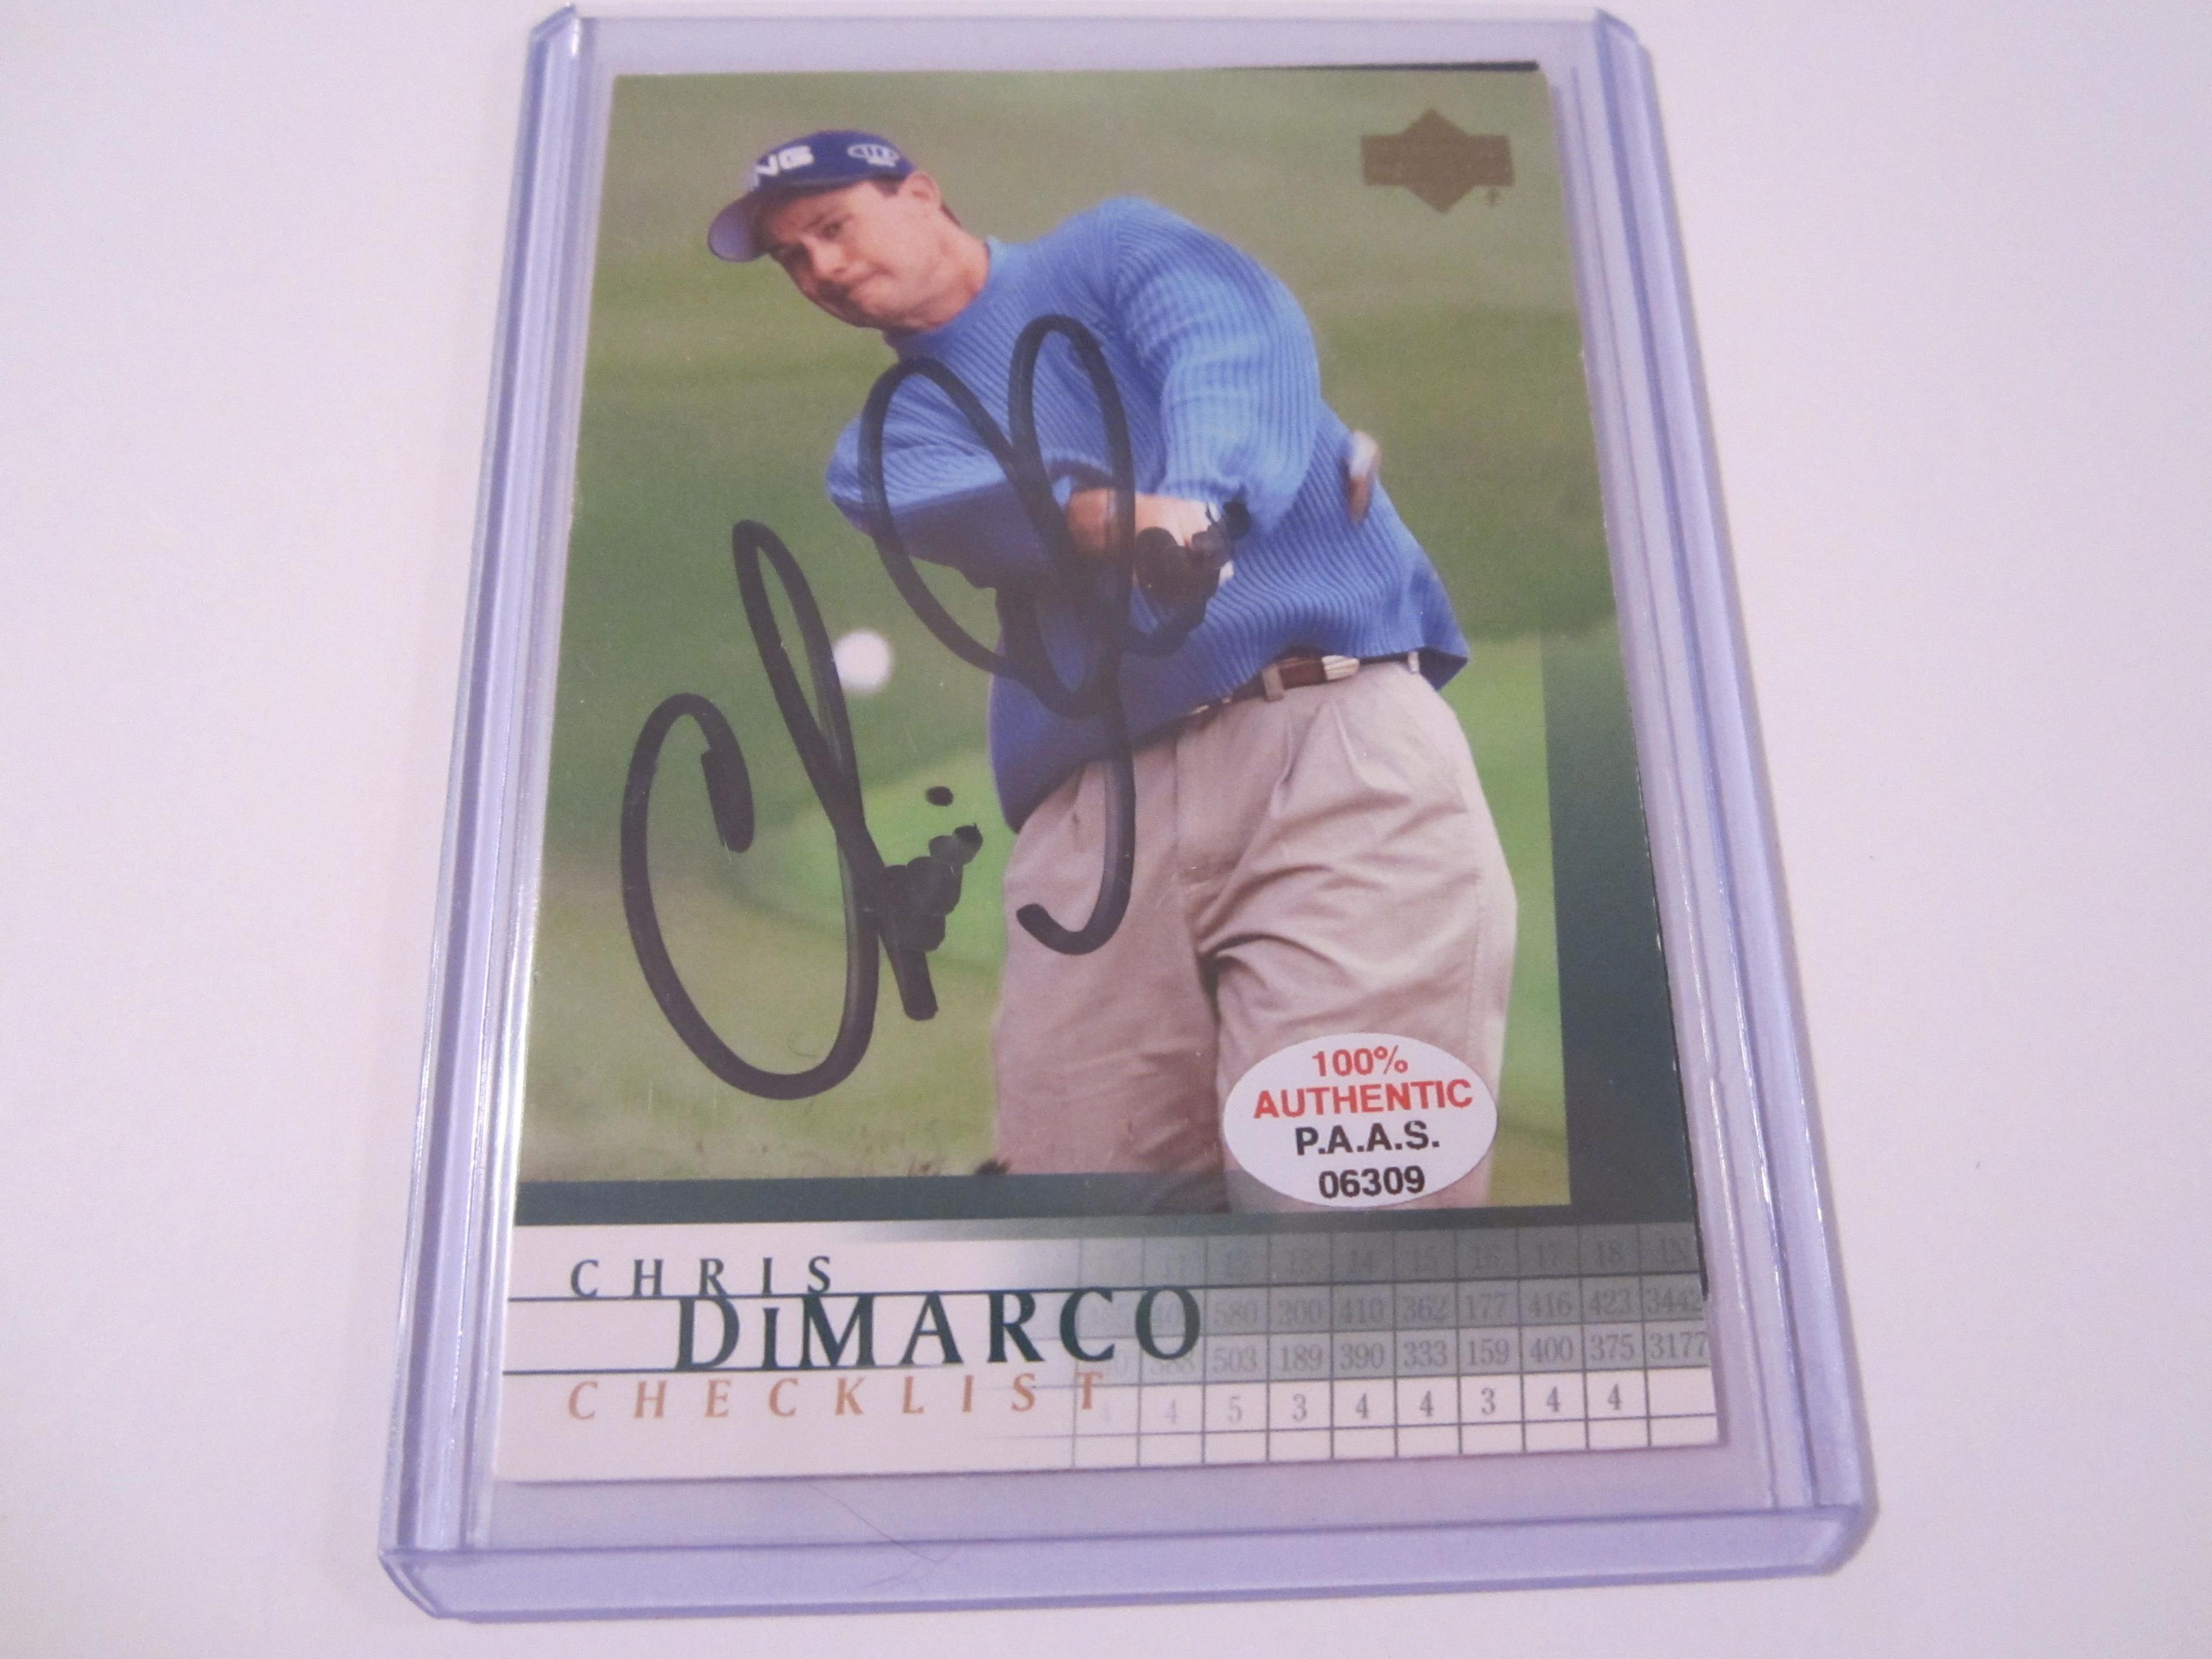 Chris DiMarco PGA Golfer signed autographed Upper Deck Golf Trading Card Certified Coa